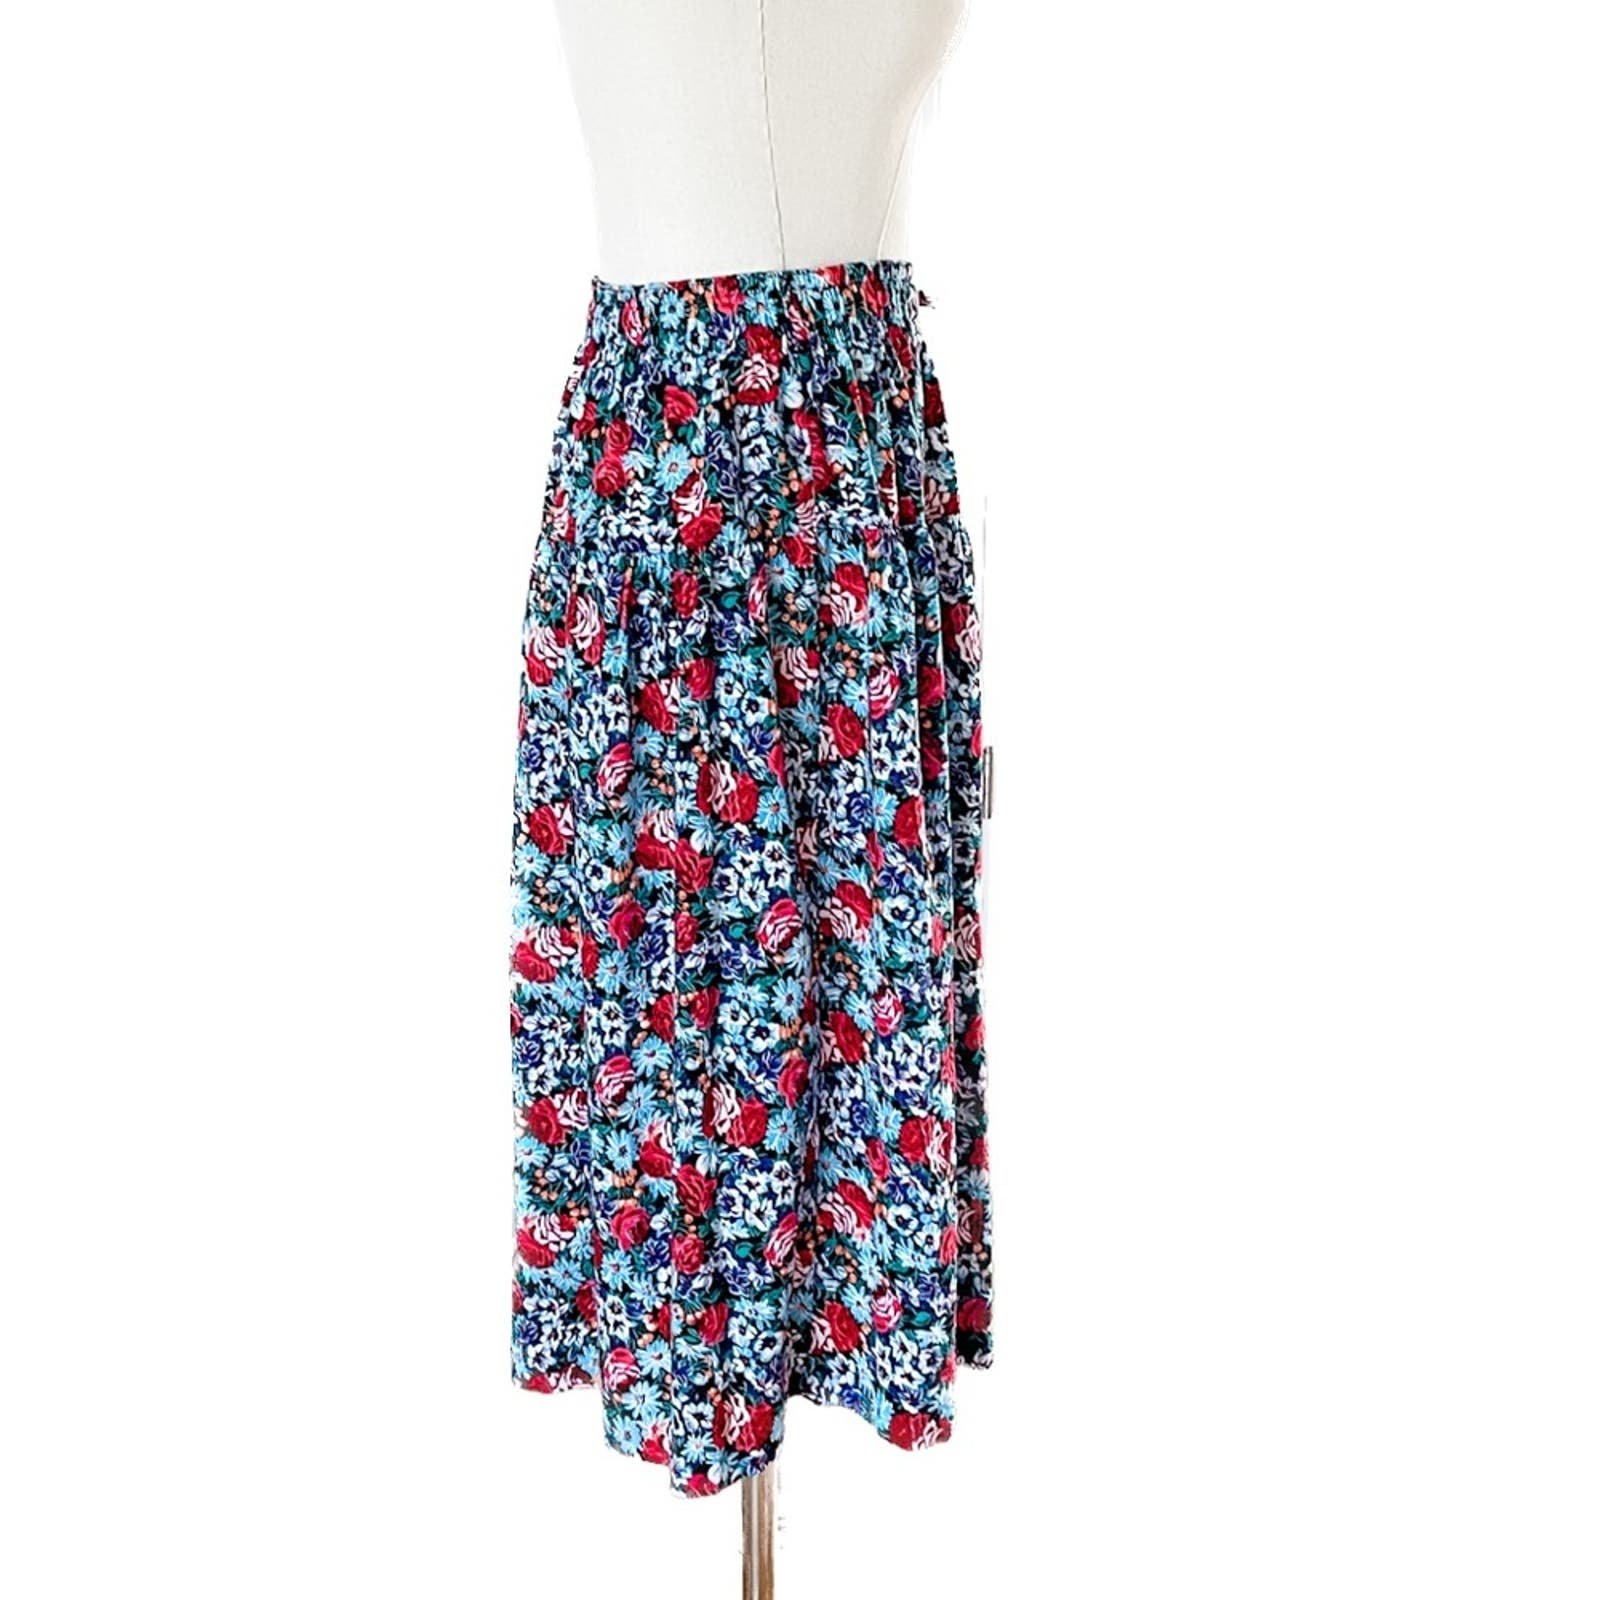 Classic Vintage 80s floral drop waist pull on midi skirt small - medium size S/M o0FAddXoZ Zero Profit 